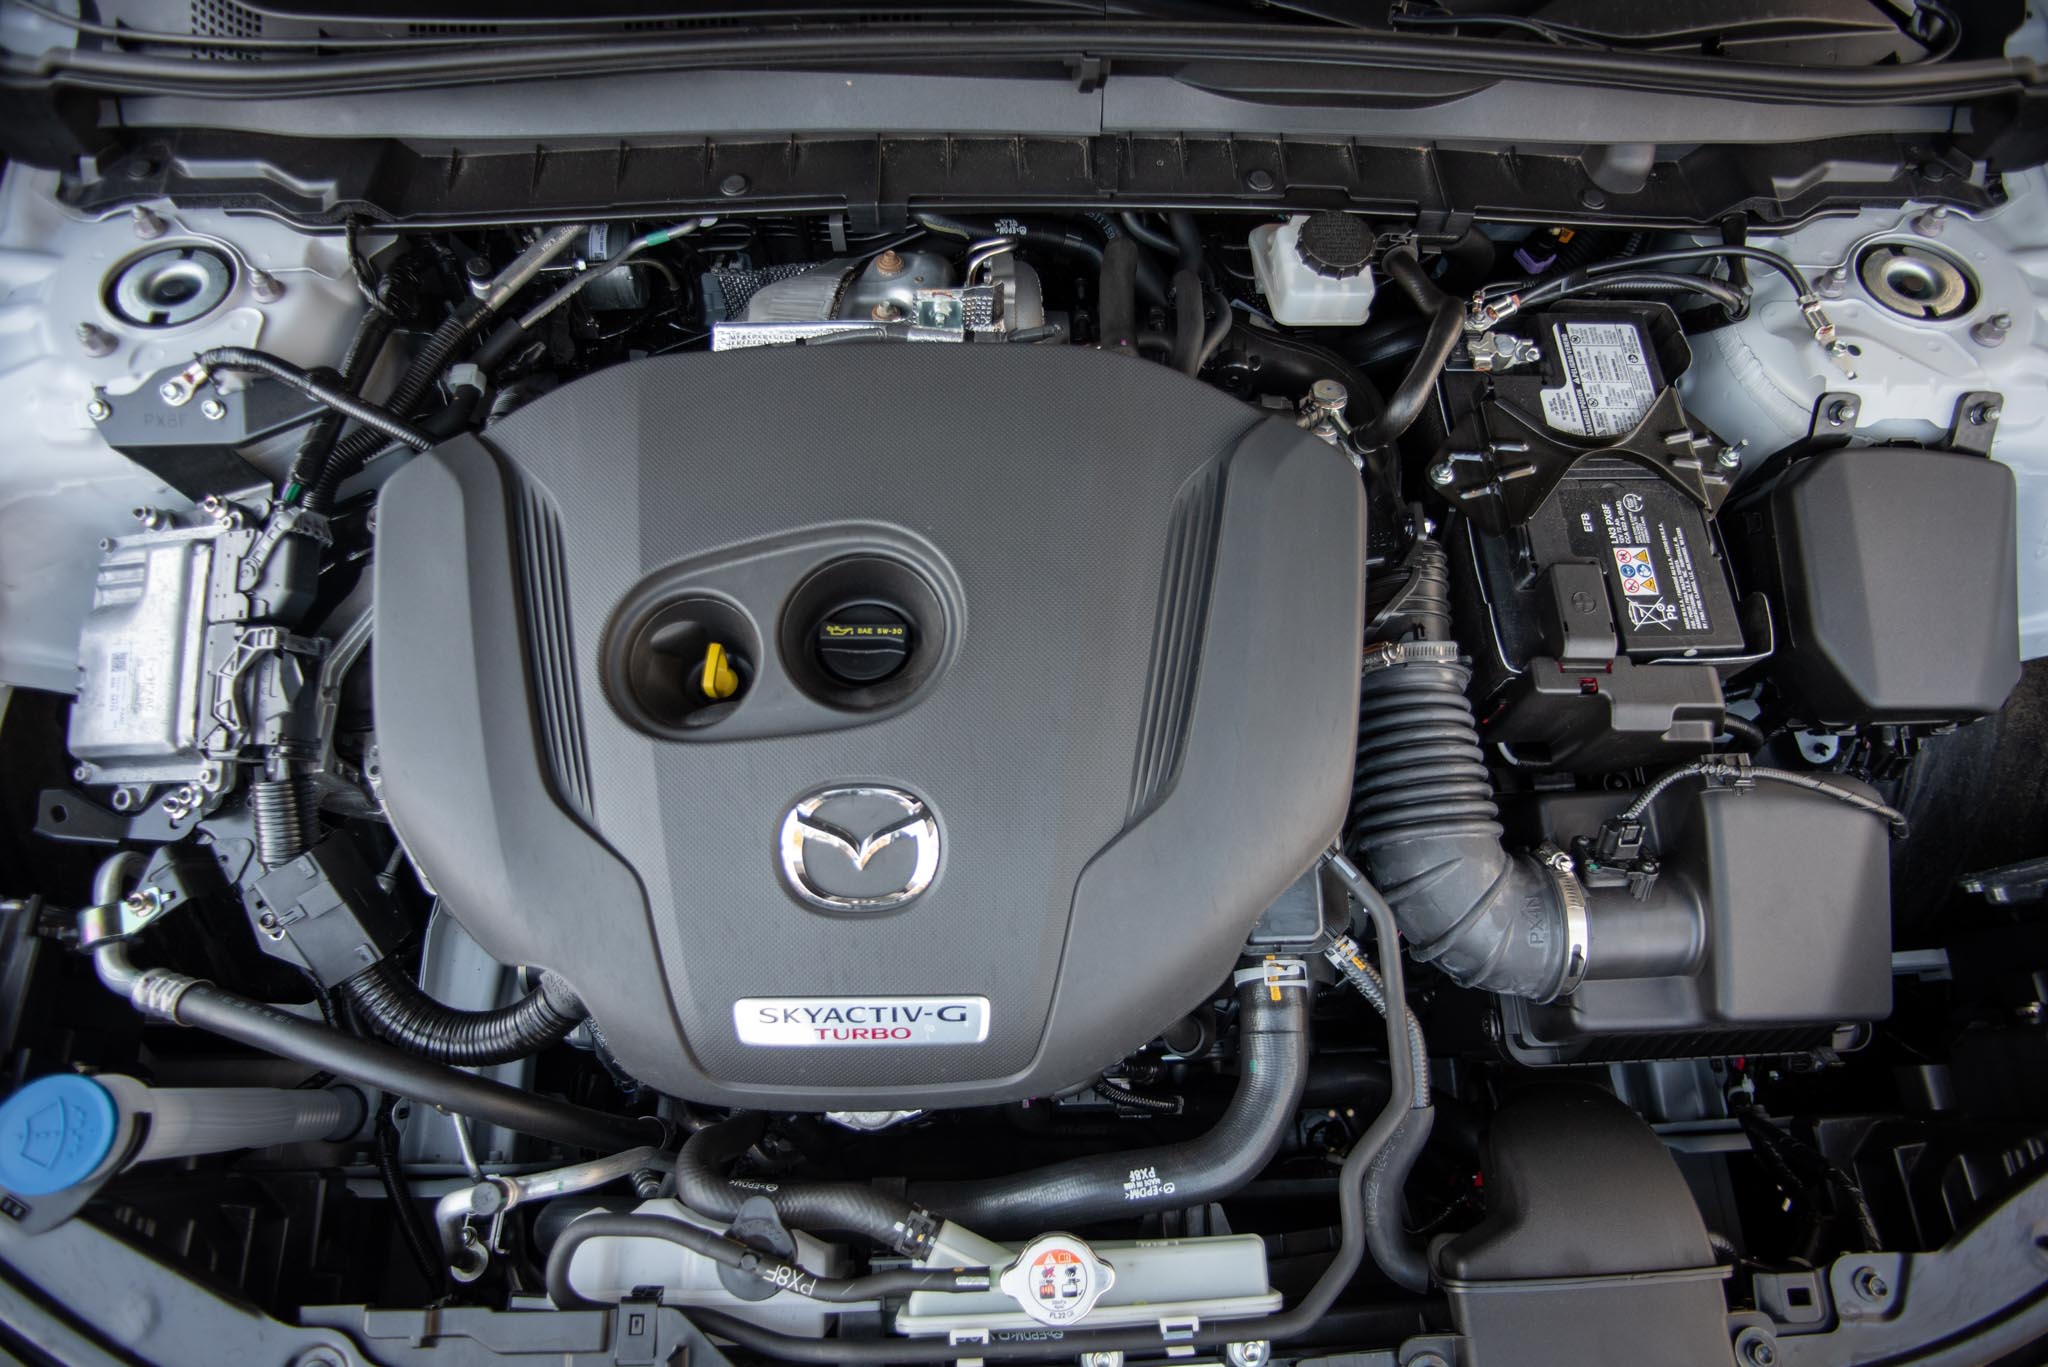 Mazda 2.5 turbo engine